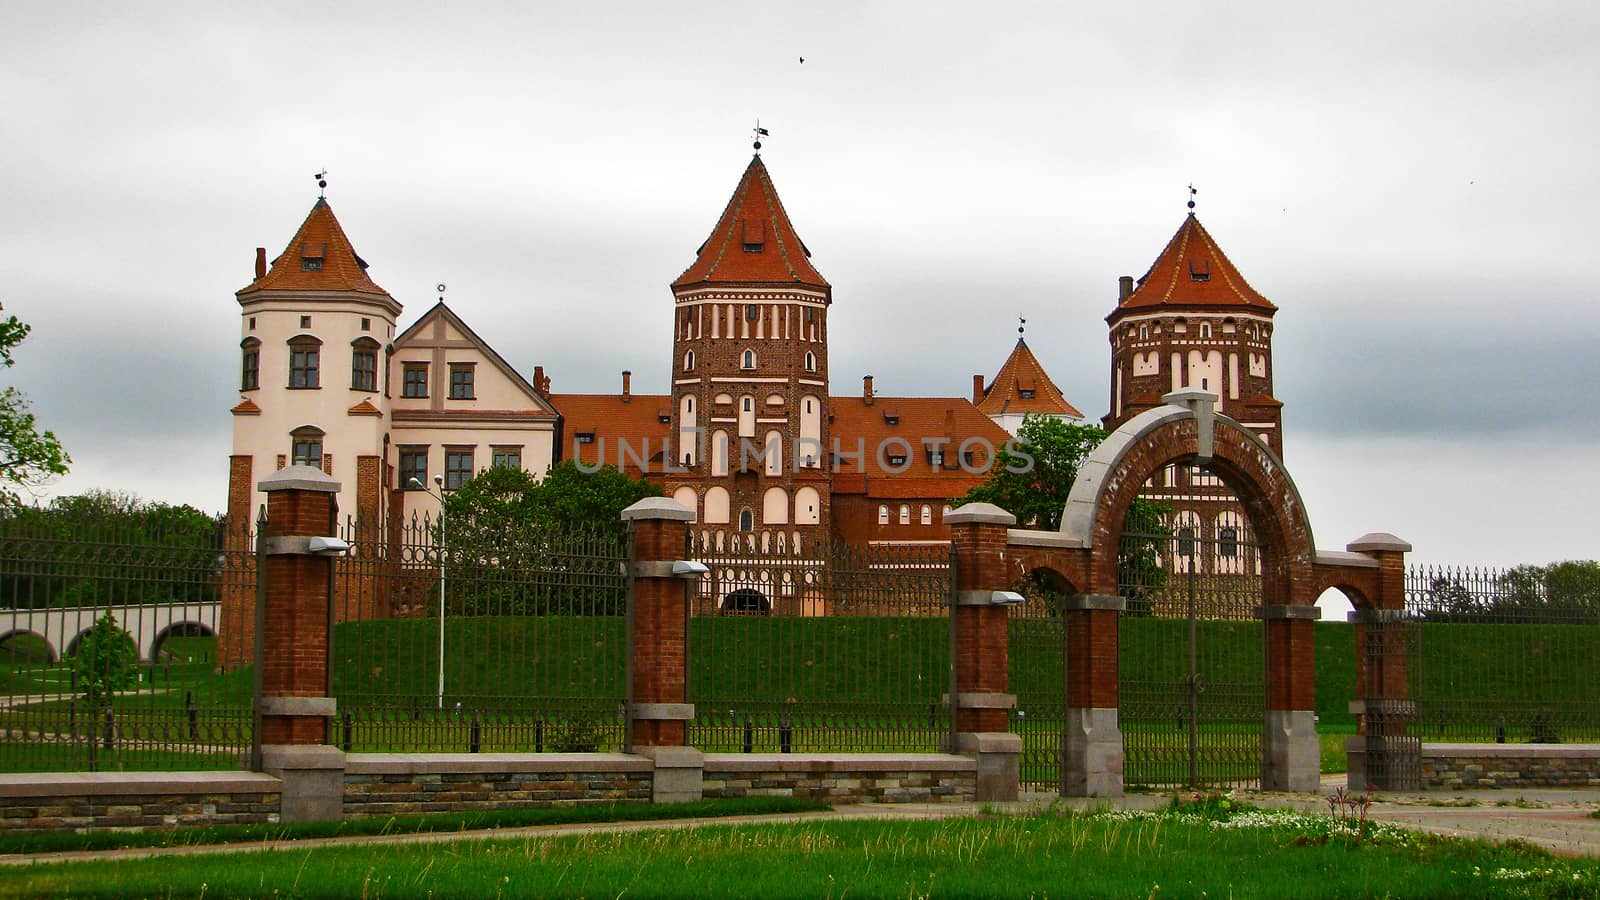 The medieval castle in Belarus by Grommik